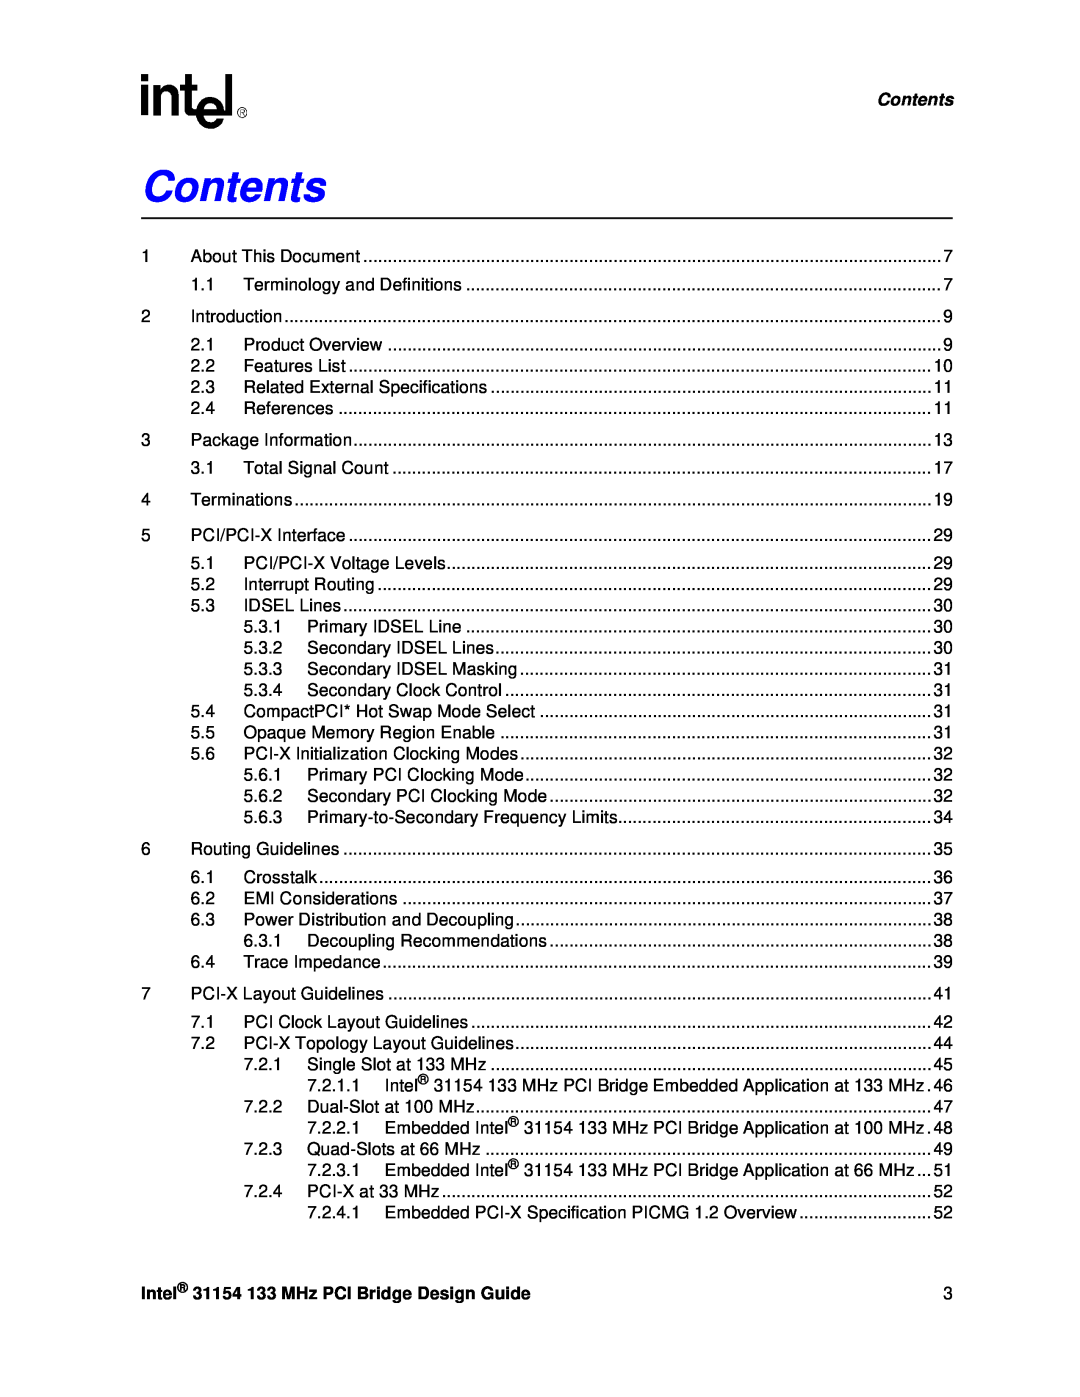 Intel manual Contents, Intel 31154 133 MHz PCI Bridge Design Guide 